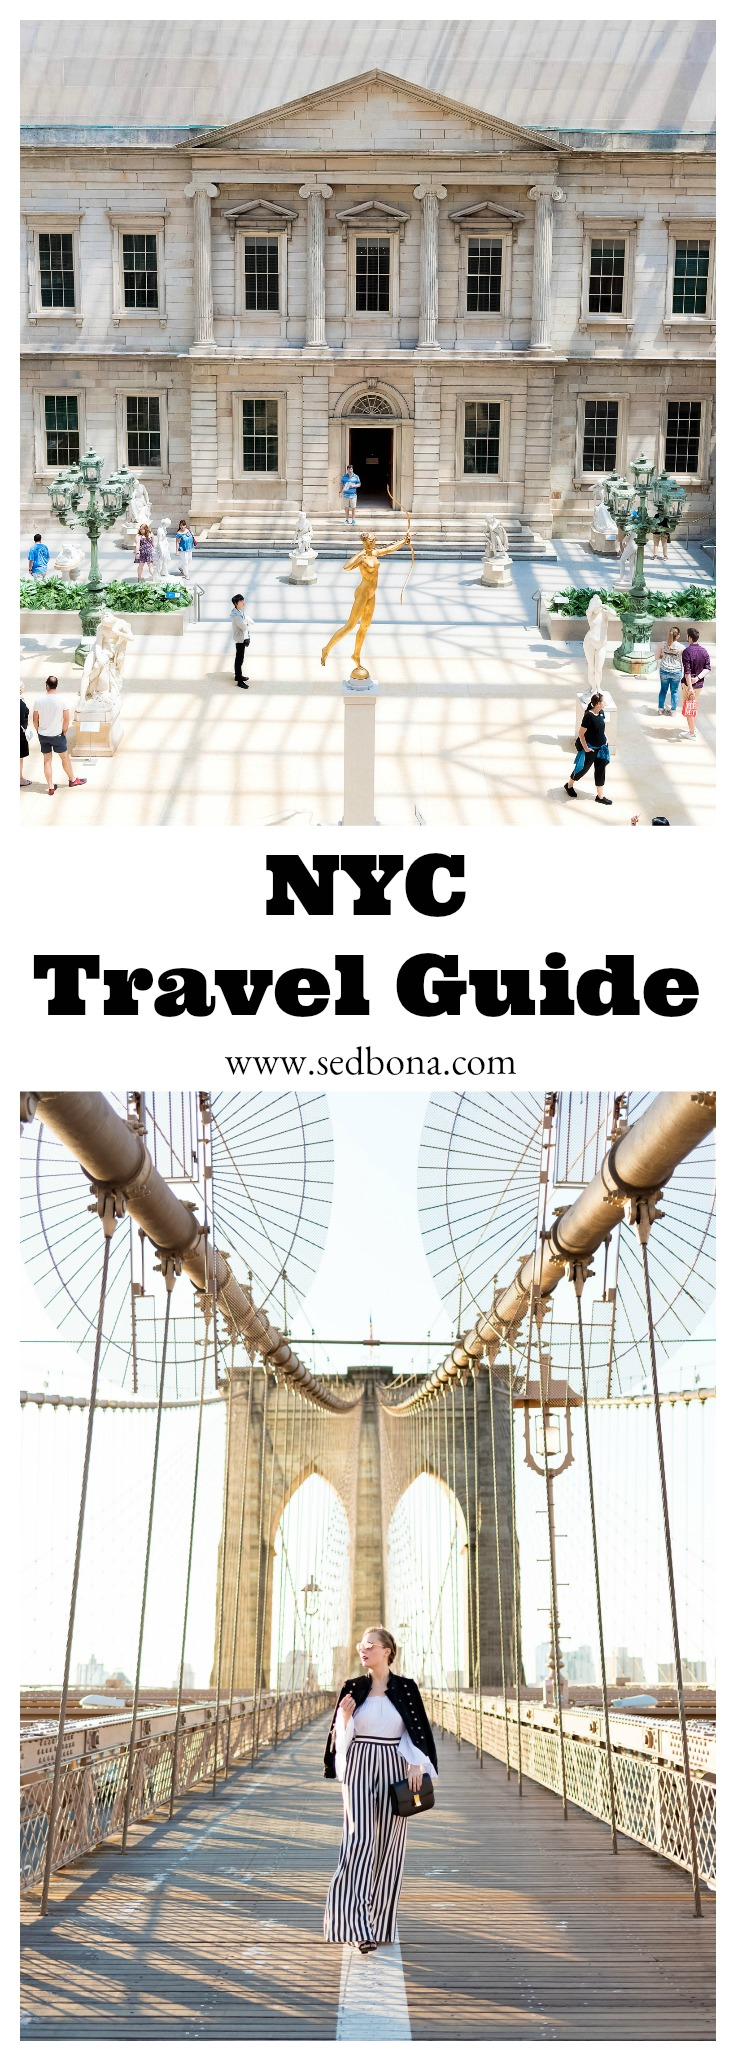 NYC Travel Guide Sed Bona